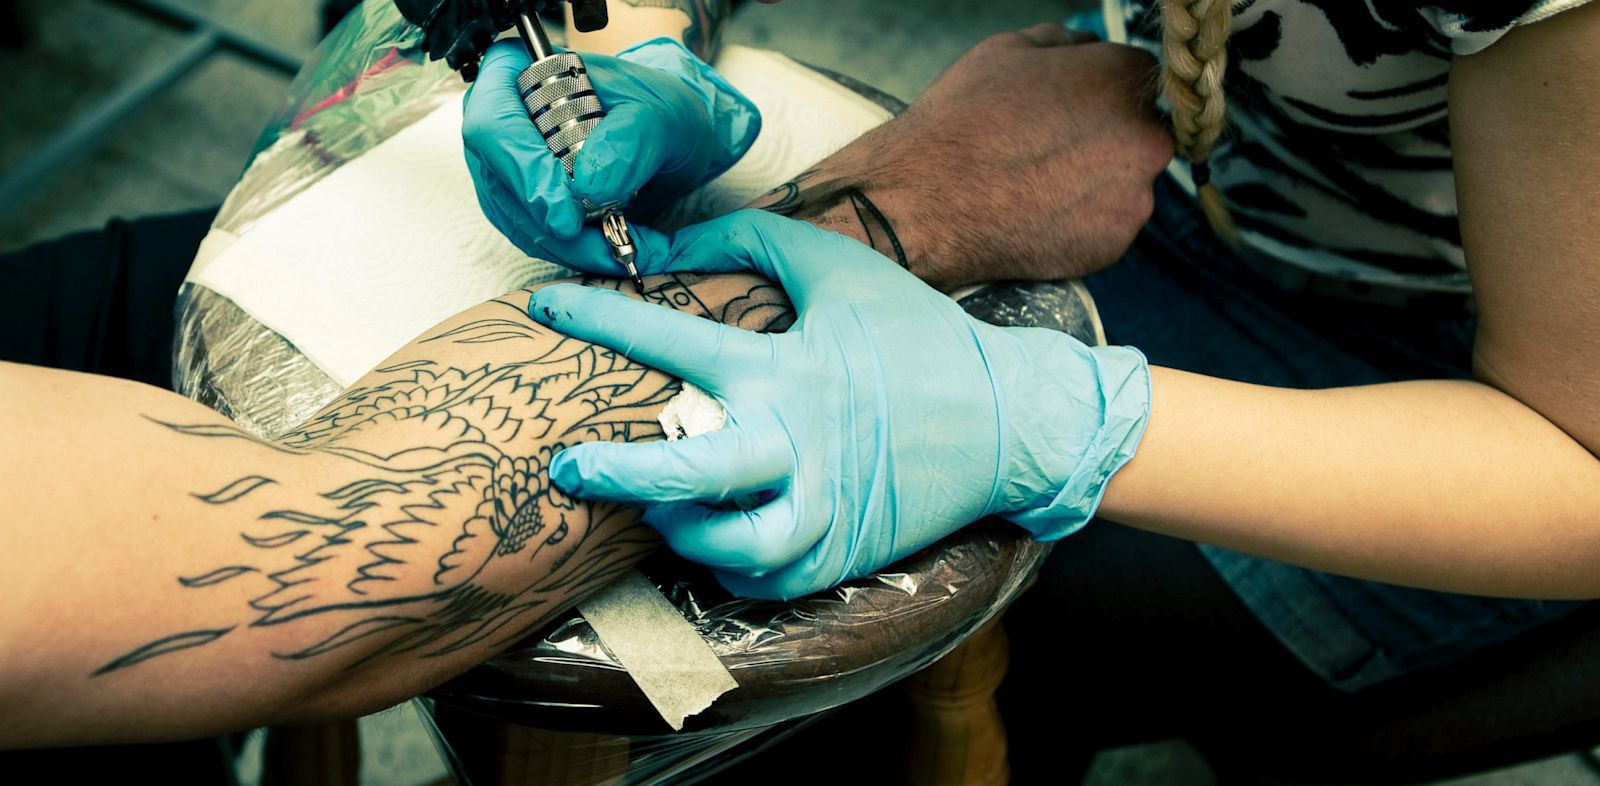  Tinta de tatuajes puede liberar células cancerígenas: estudio